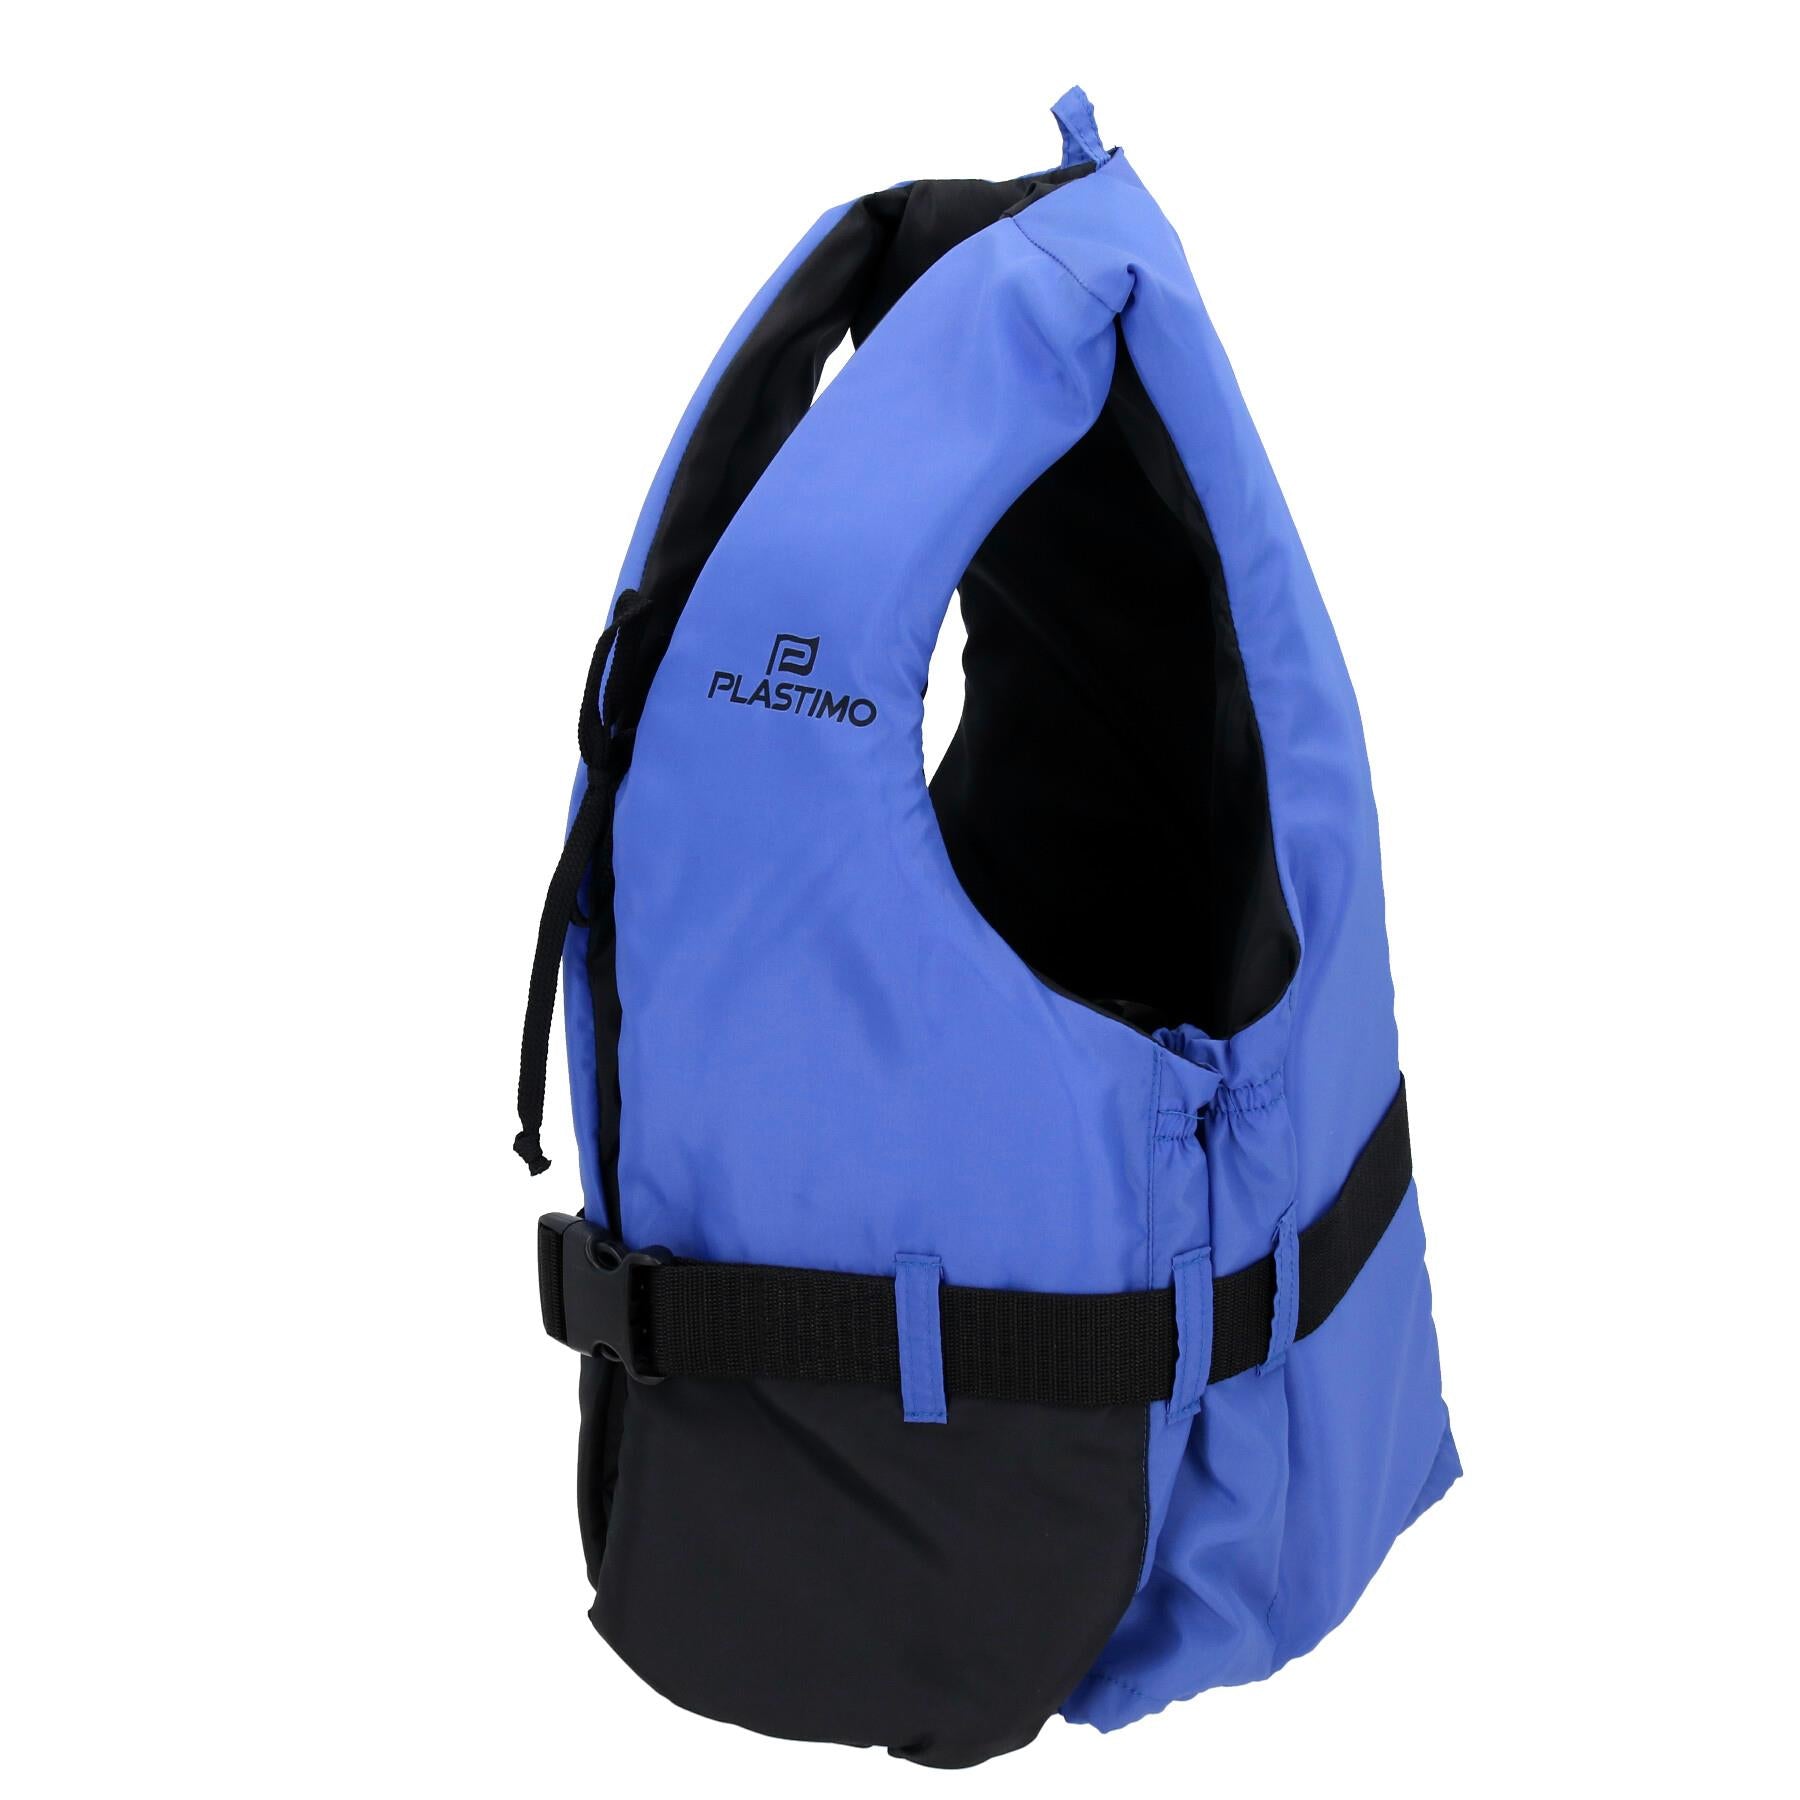 XL 90kg+ Adult Buoyancy Aid Plastimo Olympia 50N Personal Floatation Jacket Device